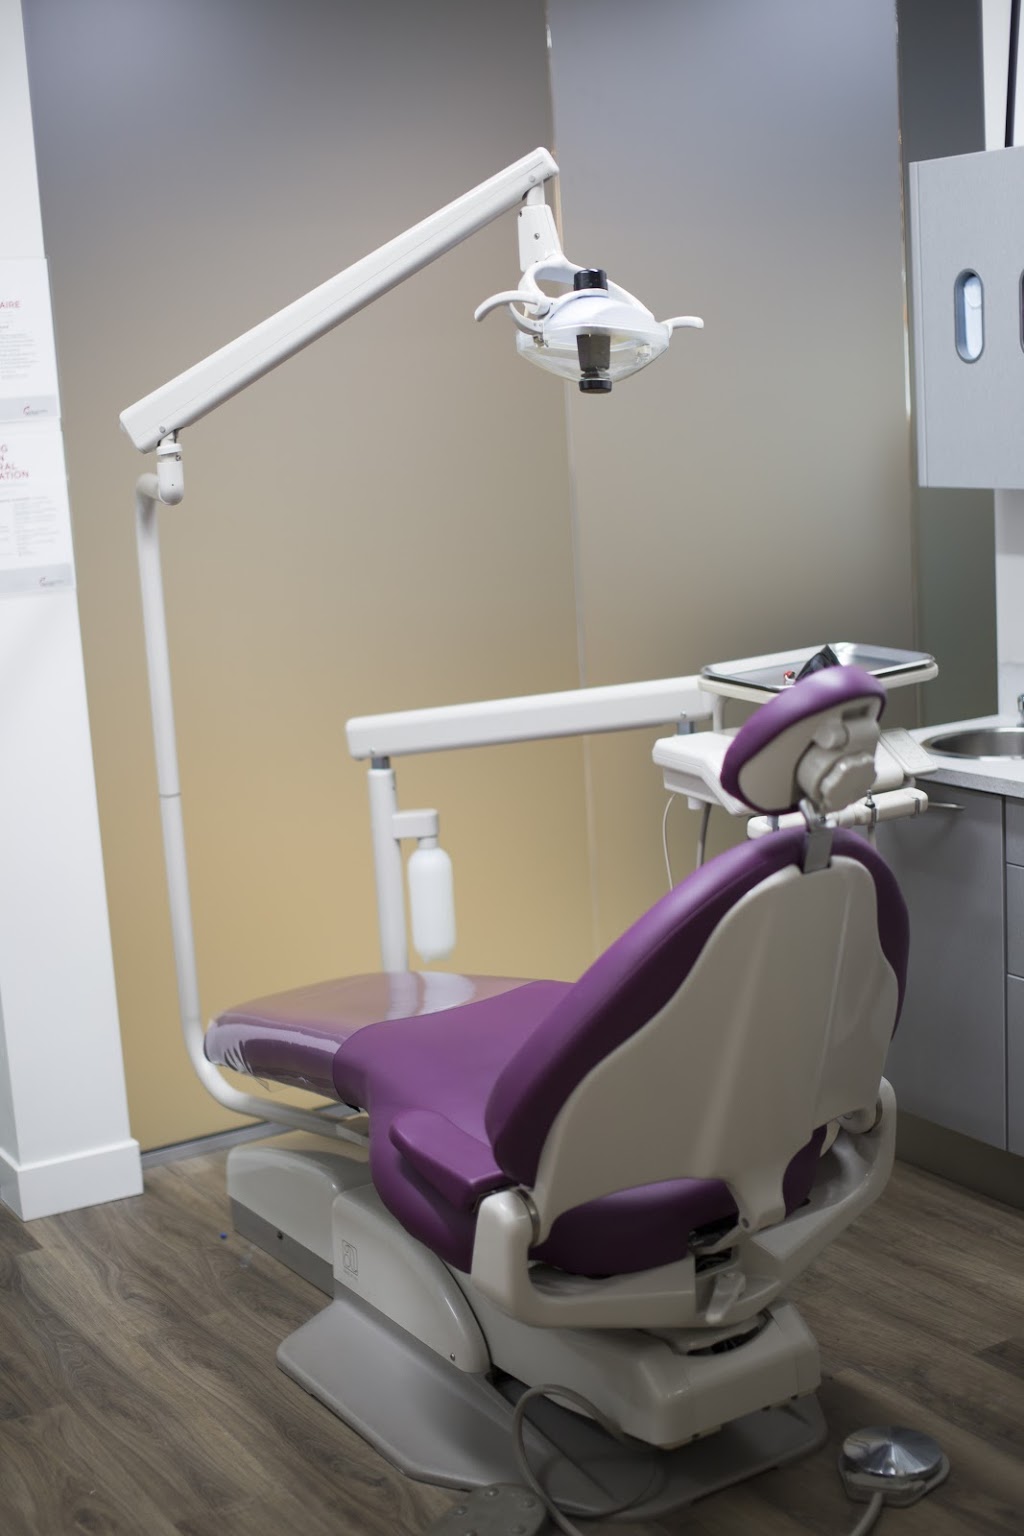 Dental Clinic France Gascon | dentist | 4999 Boulevard Saint-Charles #101, Sainte-Geneviève, QC H9H 3M8, Canada | 5146207084 OR +1 514-620-7084